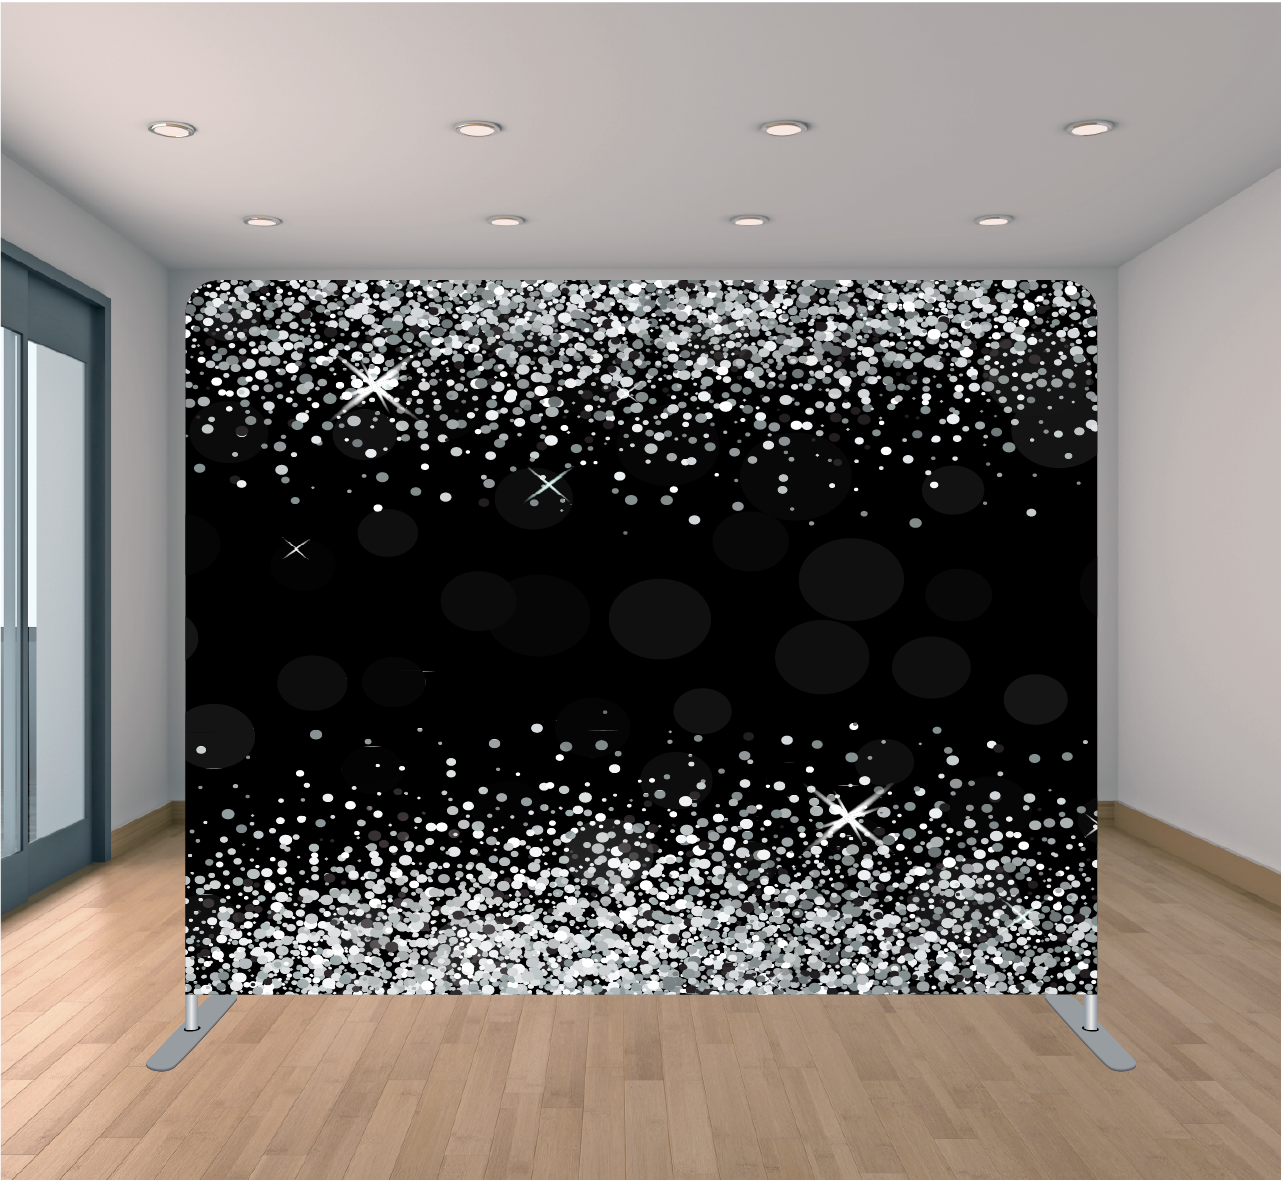 8X8ft Pillowcase Tension Backdrop- Black and White Glitter